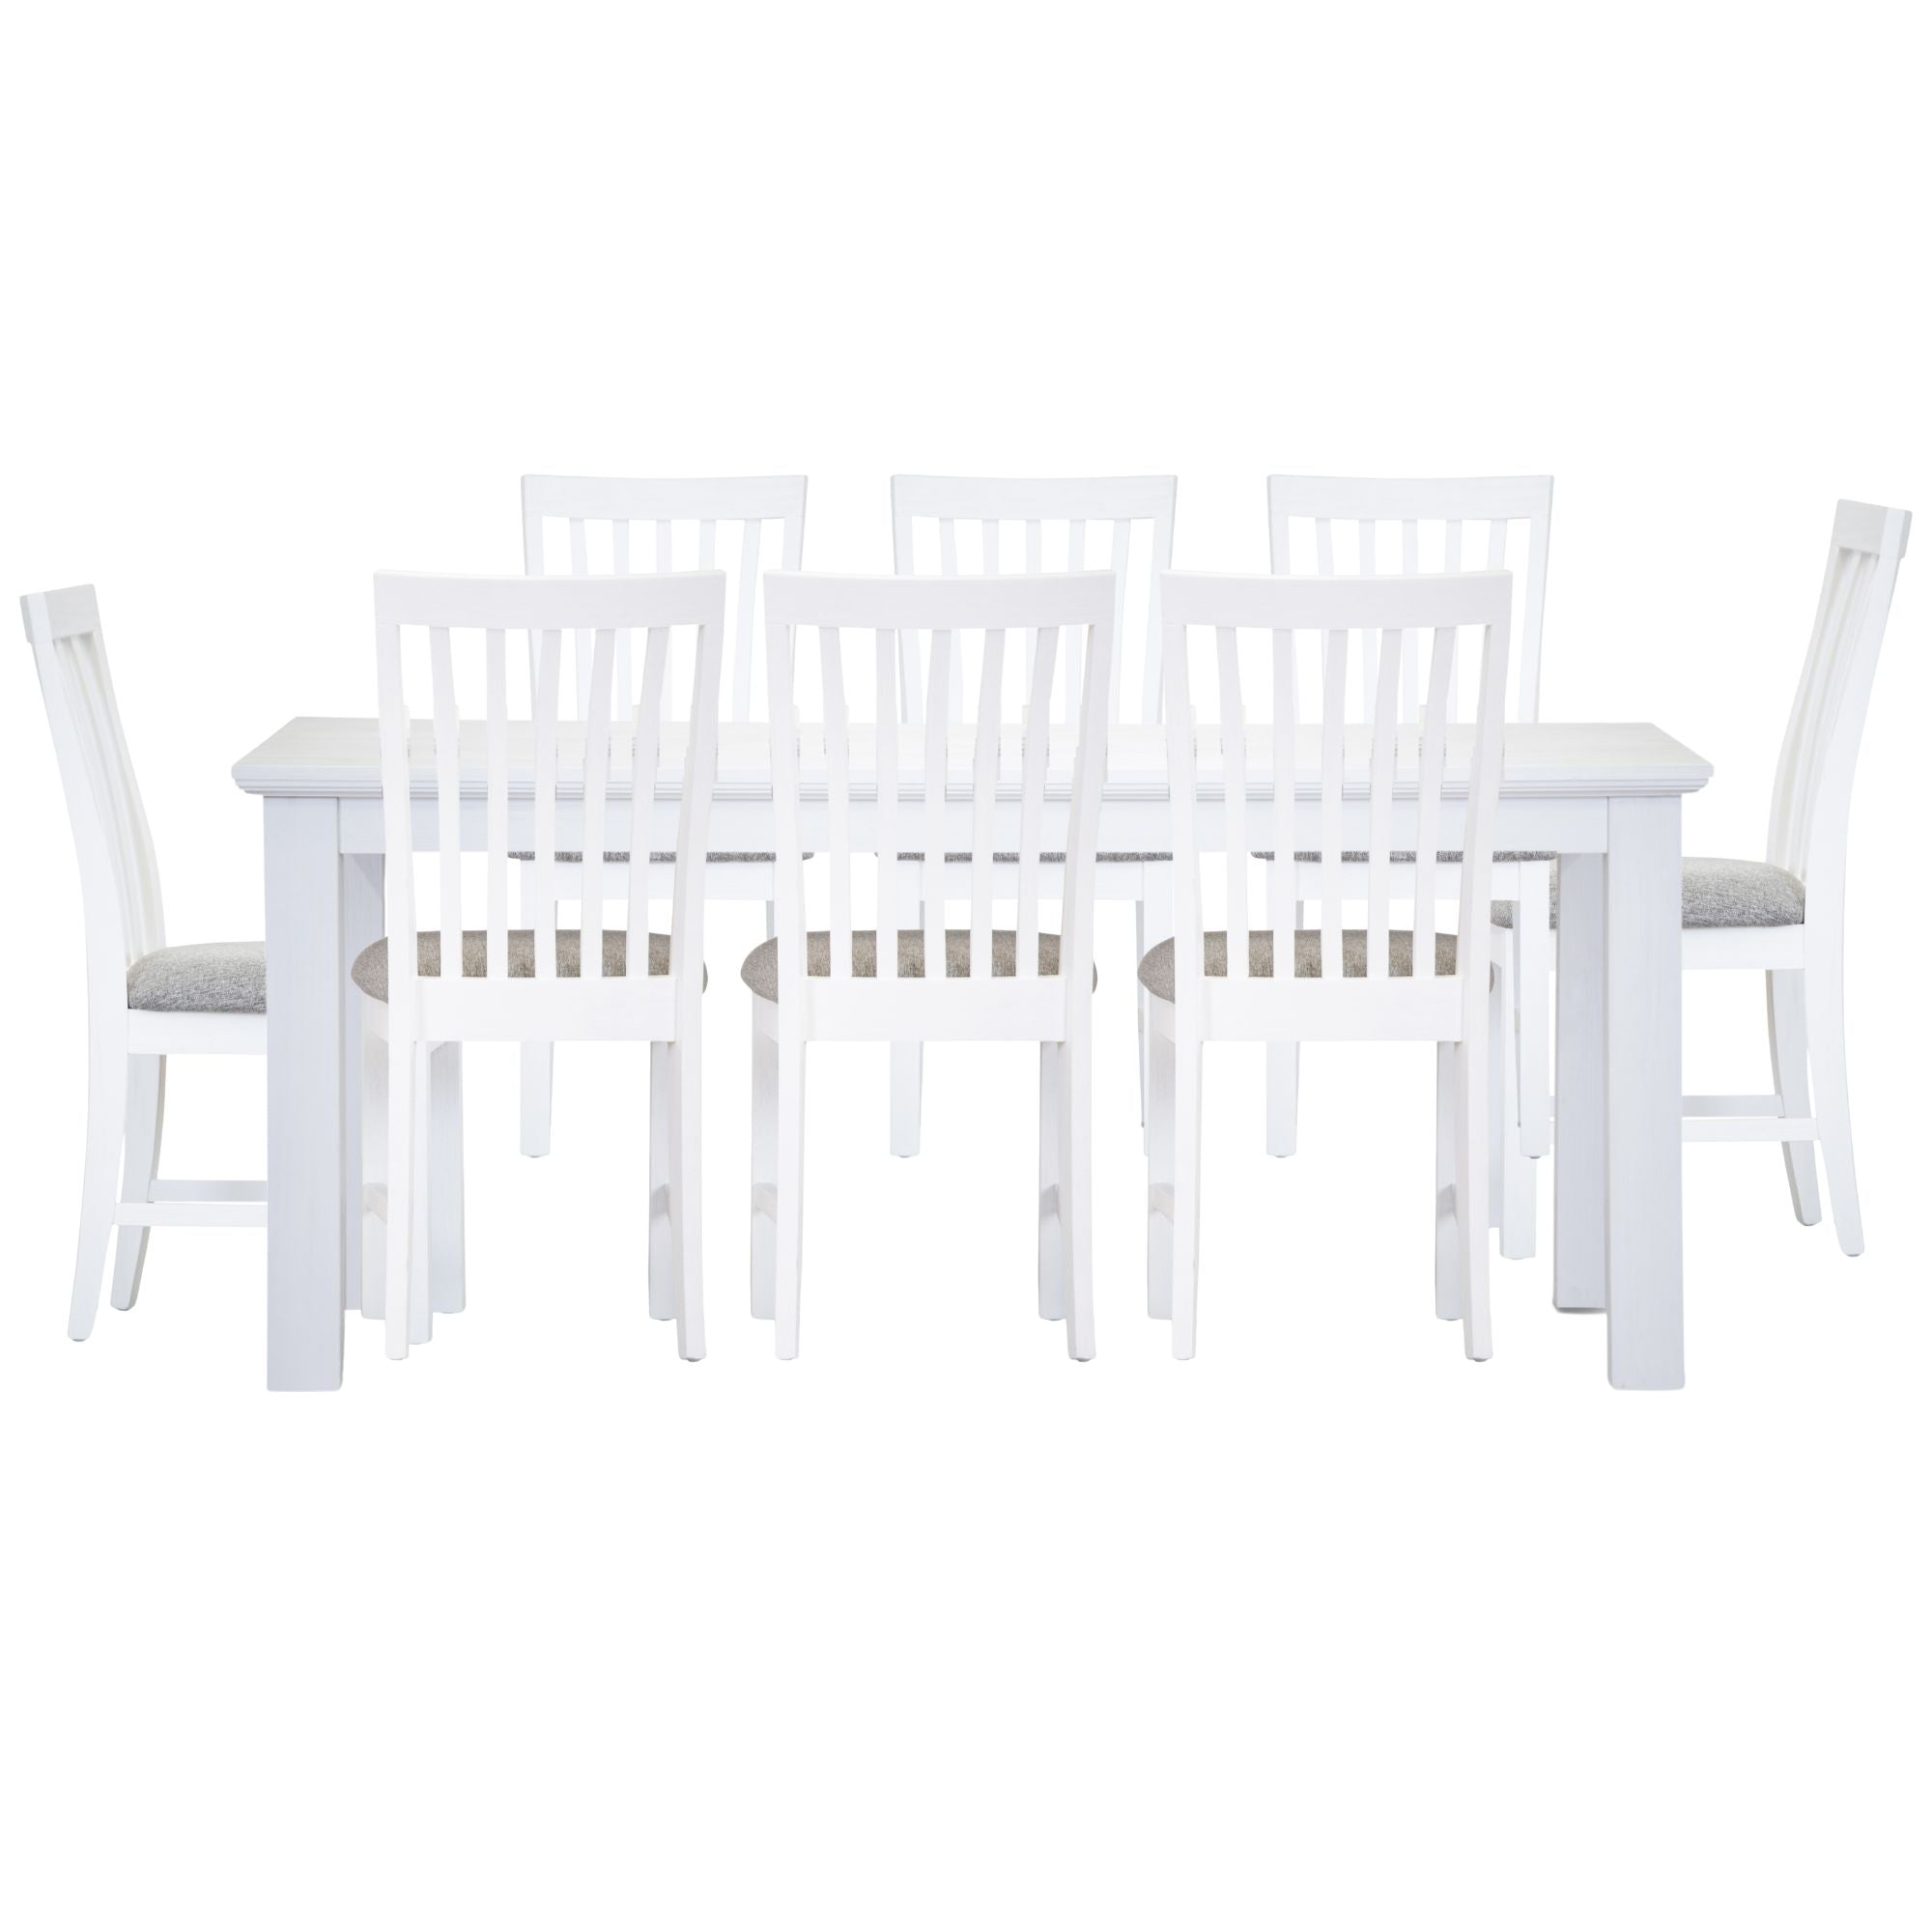 Laelia 9pc Dining Set 220cm Table 8 Chair Acacia Wood Coastal Furniture - White - SILBERSHELL